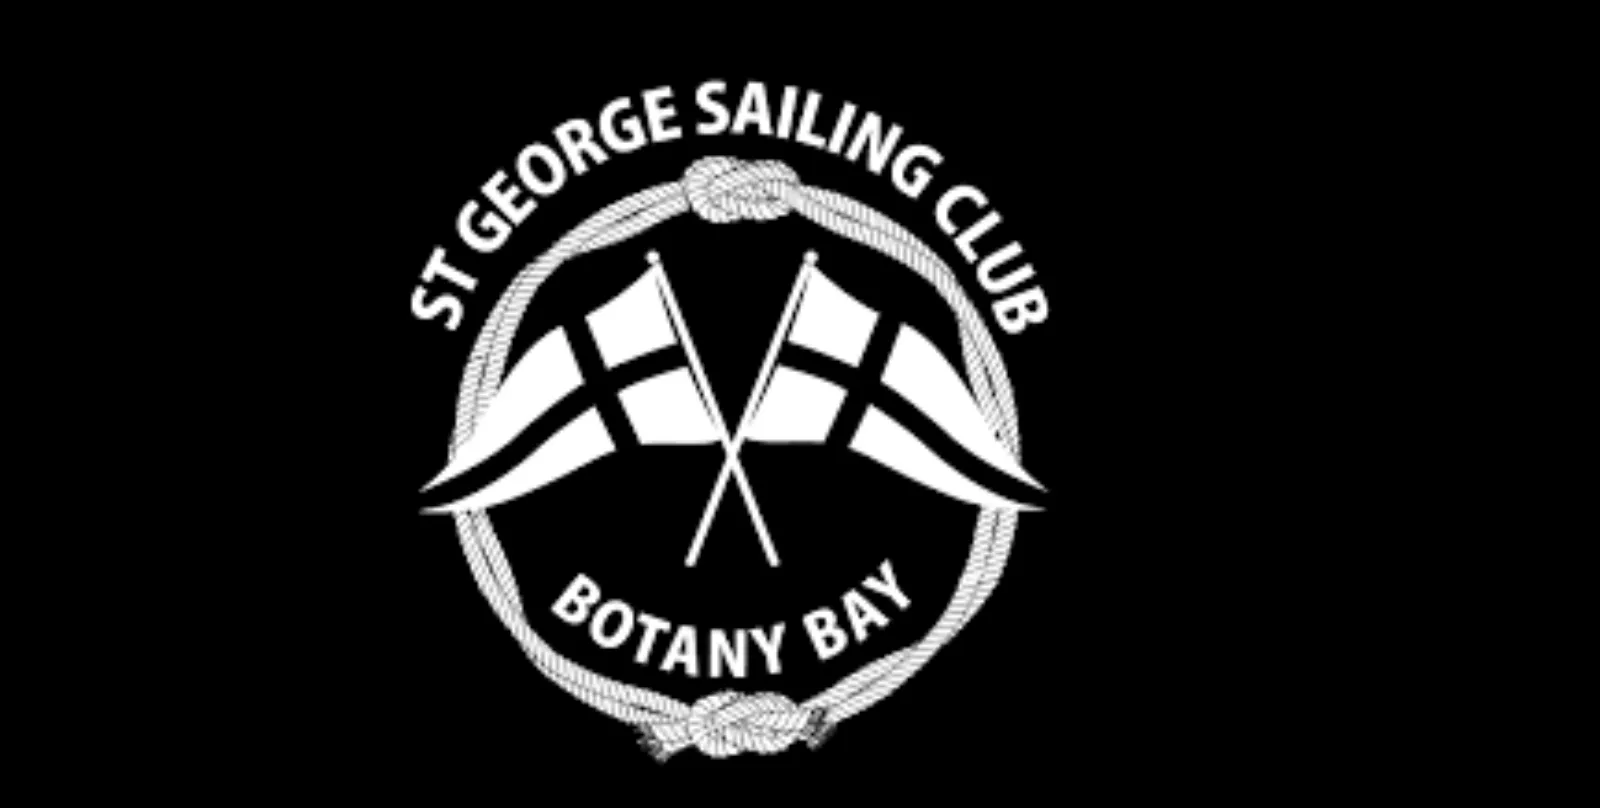 St George Sailing Club Menu Prices Australia 11zon.webp